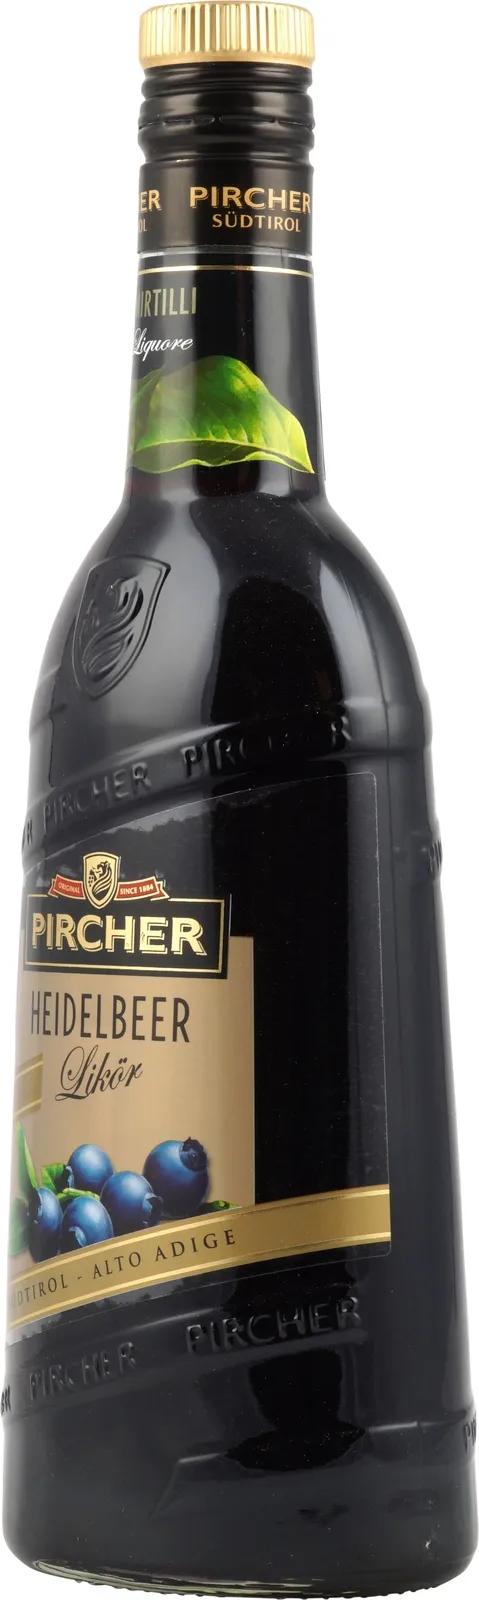 Pircher Heidelbeerlikör 25% Vol., 0,7 l